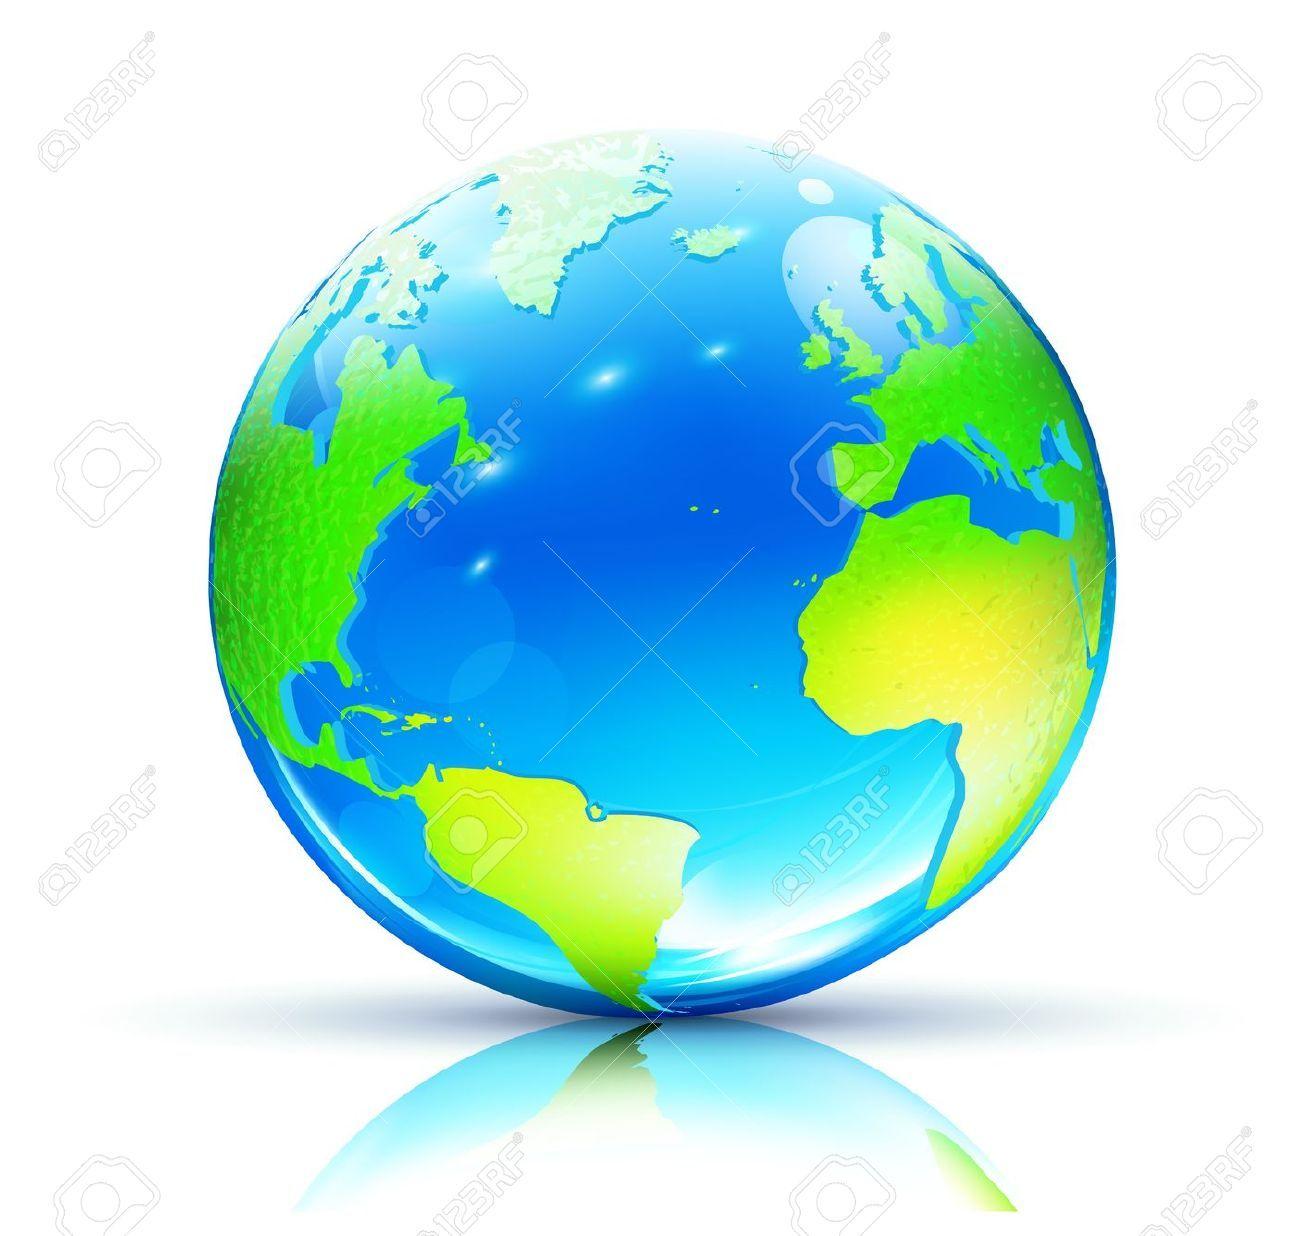 Transparent World Globe Logo - World globe map jpg royalty free stock